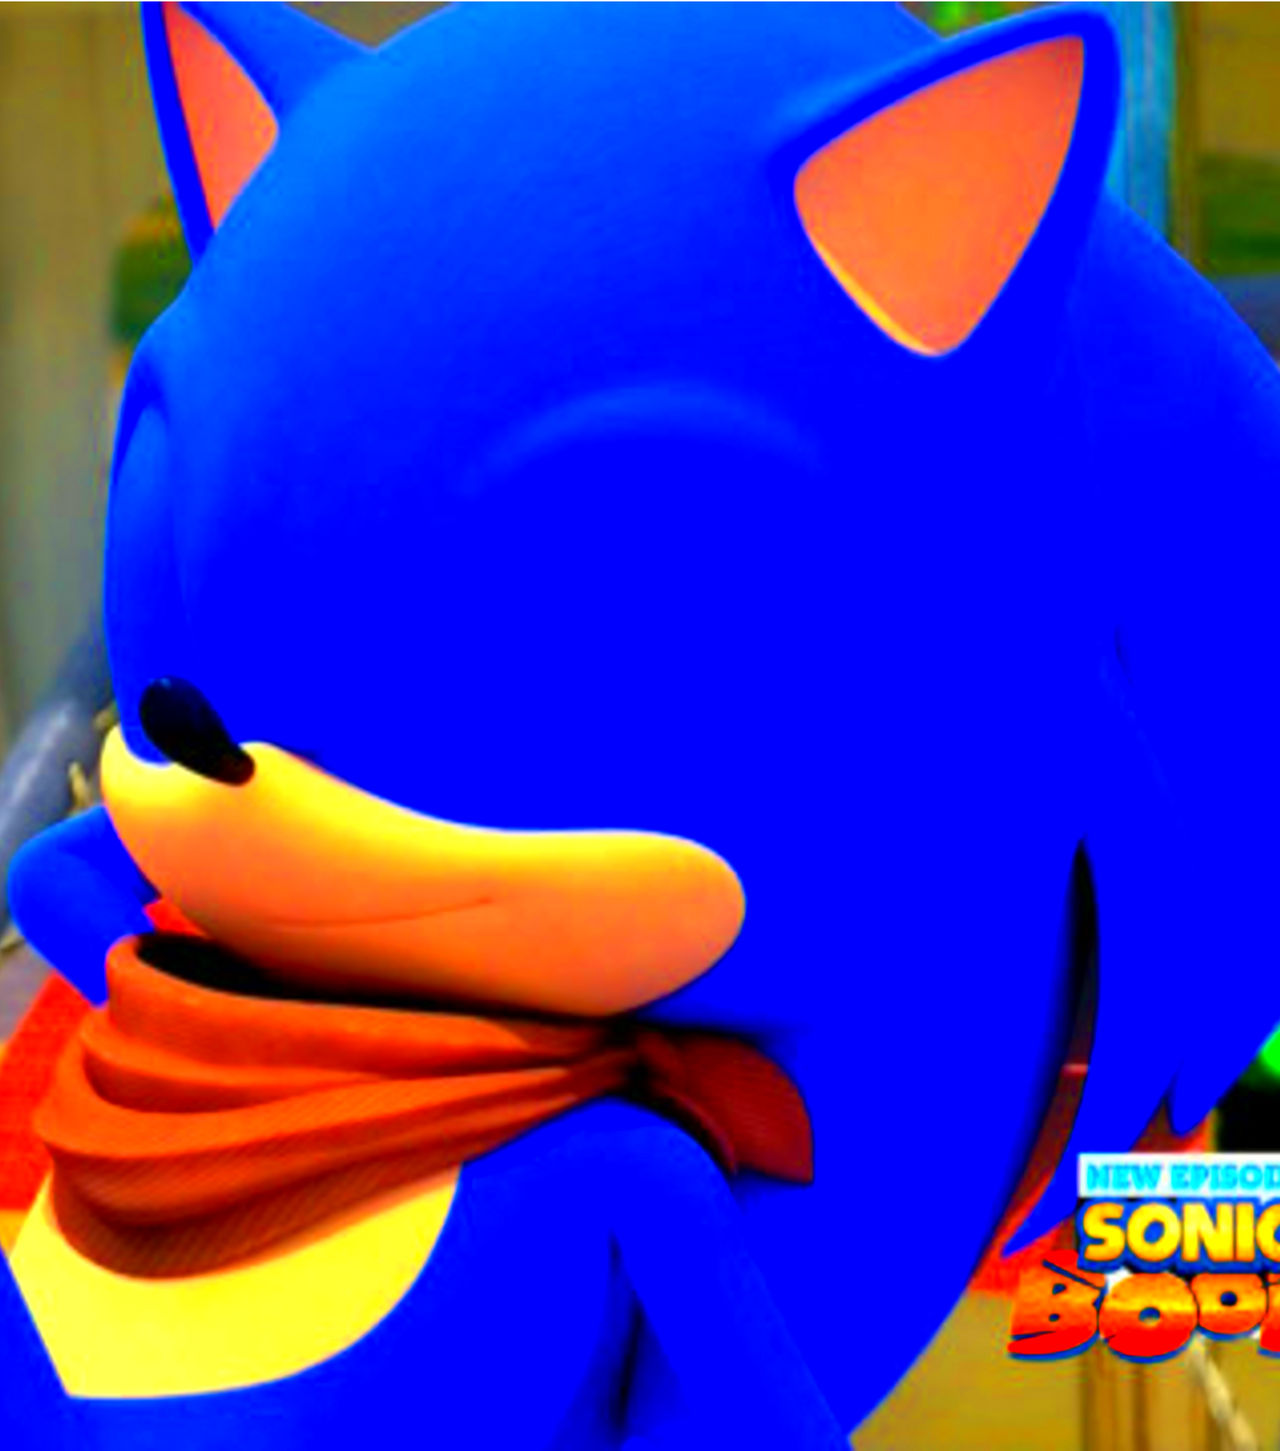 Sonic,me diga 🥺🥺🥺 : r/jovemnerd